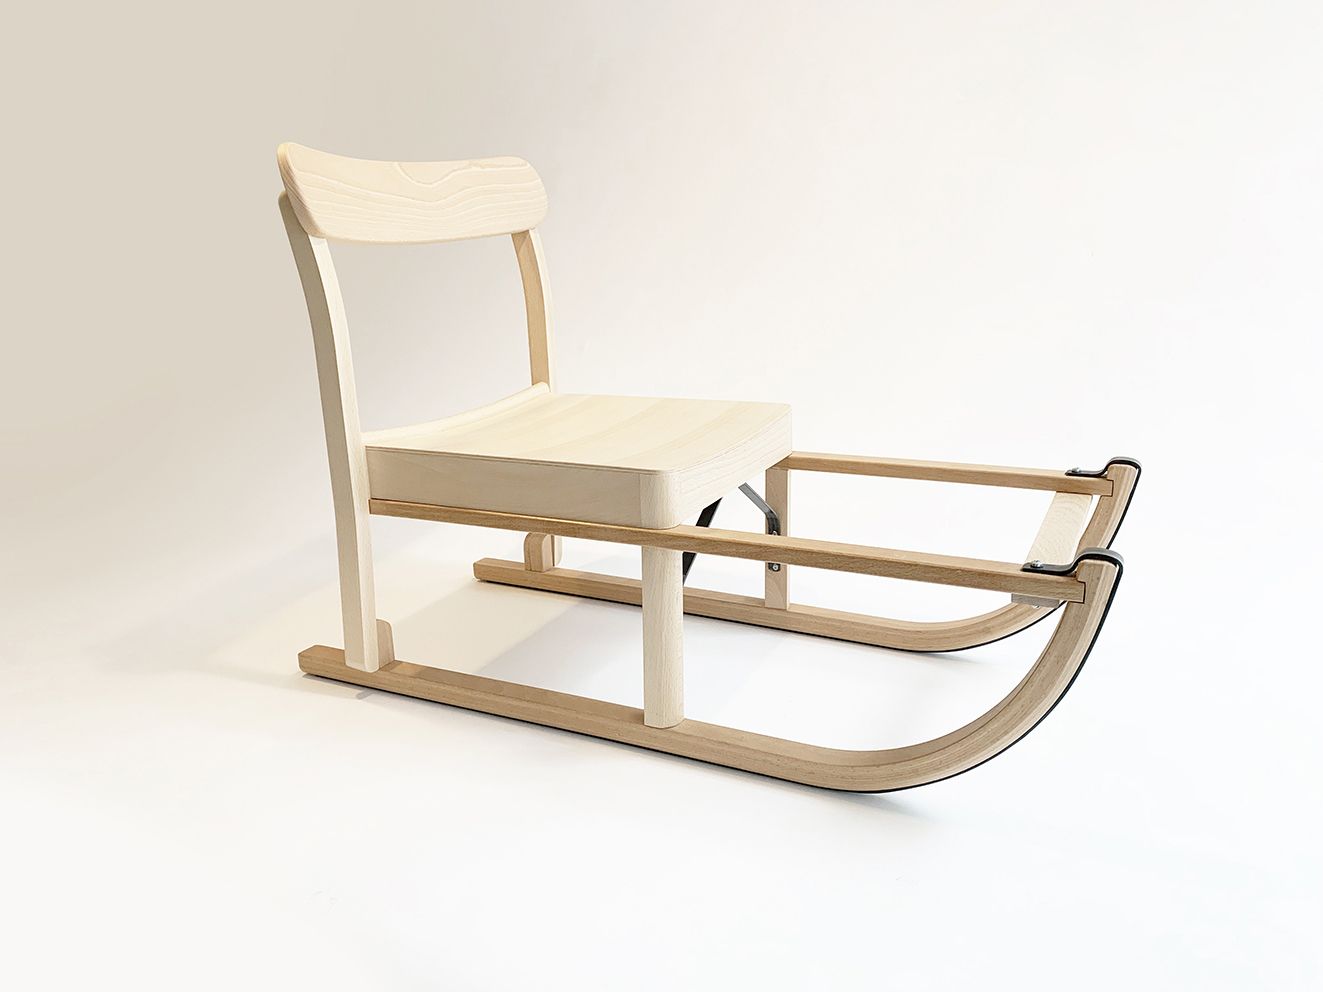 Grégoire de Lafforest Sled chair



"The Chaise Atelier was designed by TAF Stud&hellip;